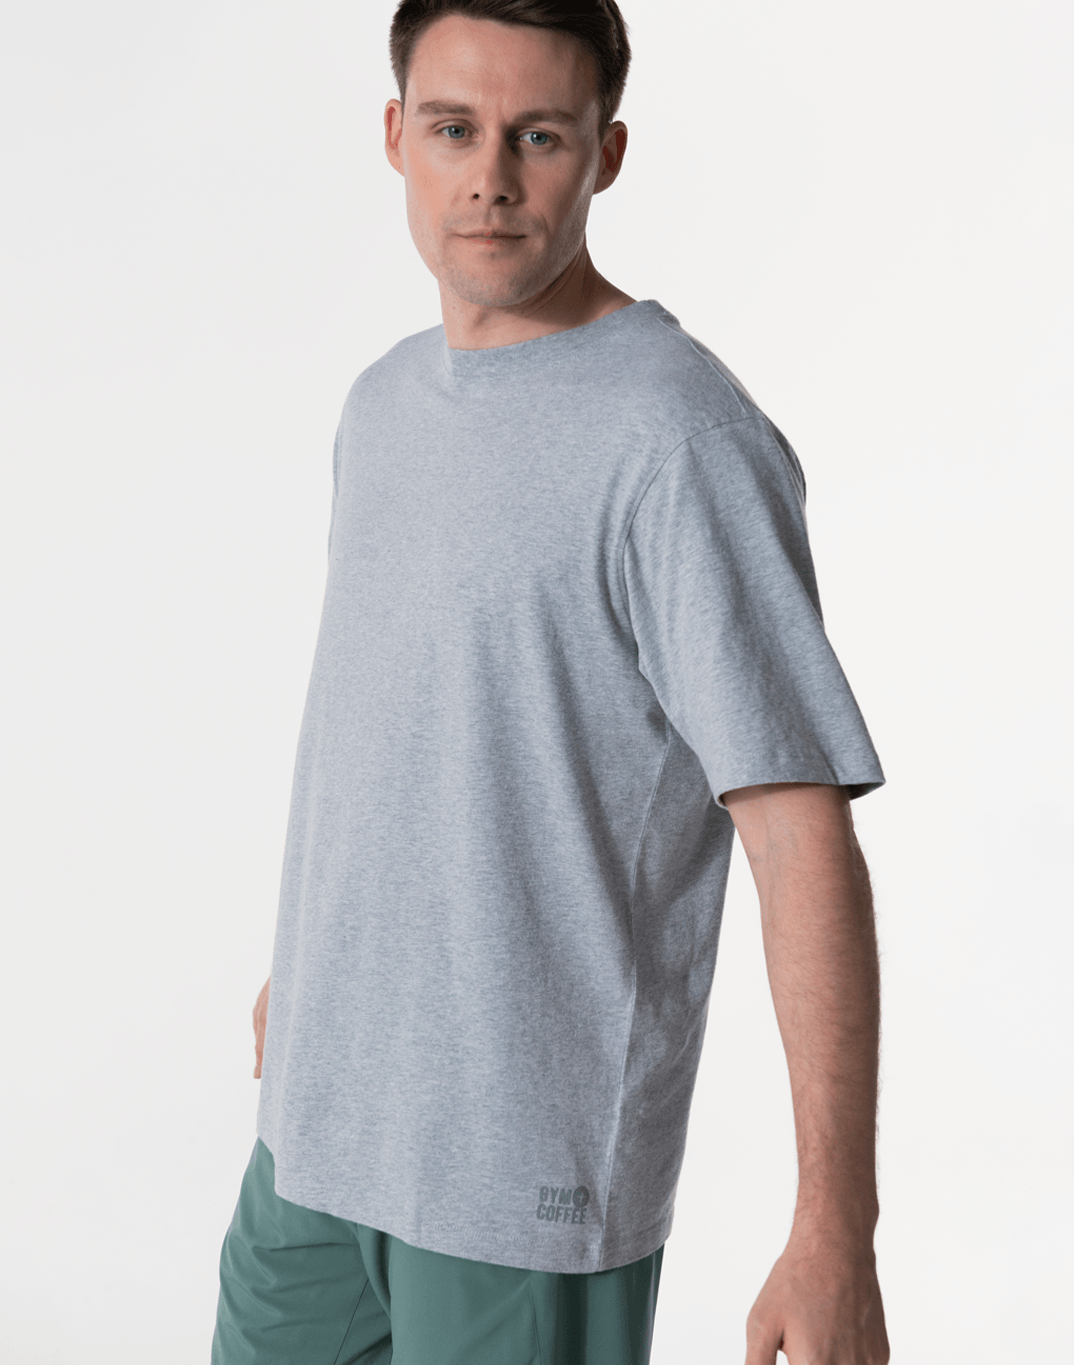 Kinney Tee in Grey Marl - T-Shirts - Windsorbauders IE